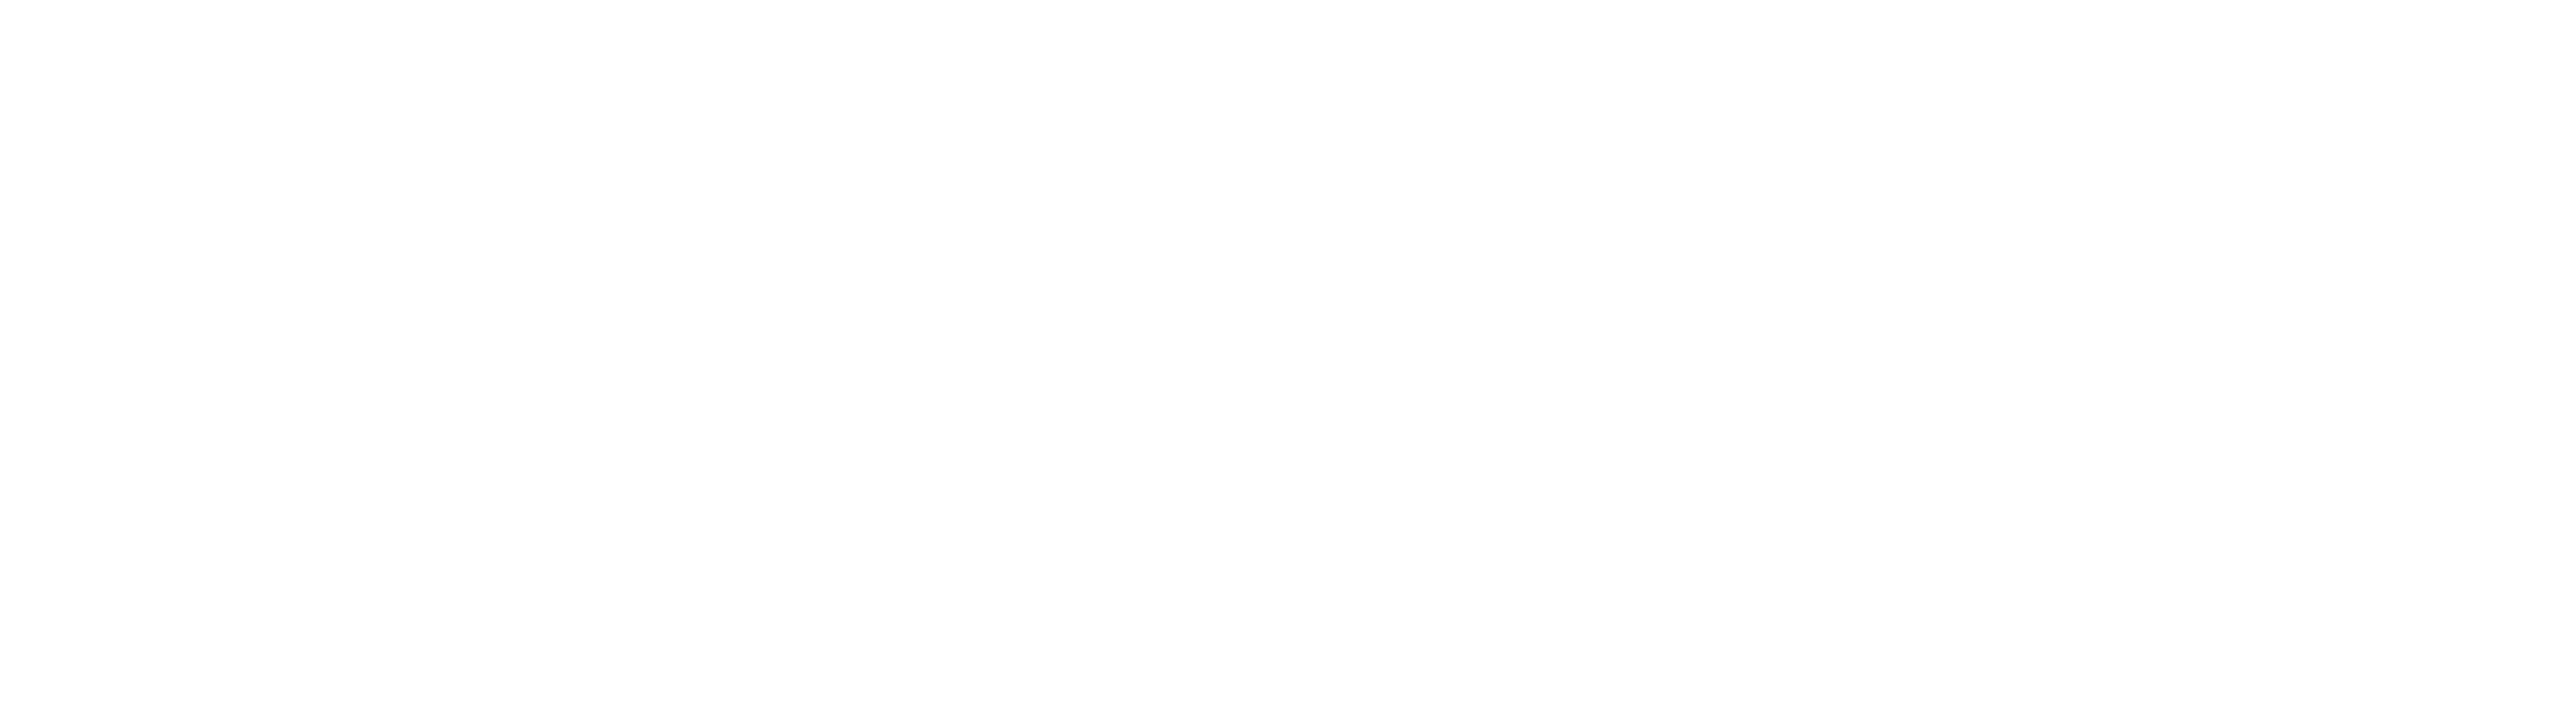 Unión Europea NextGenerationEU